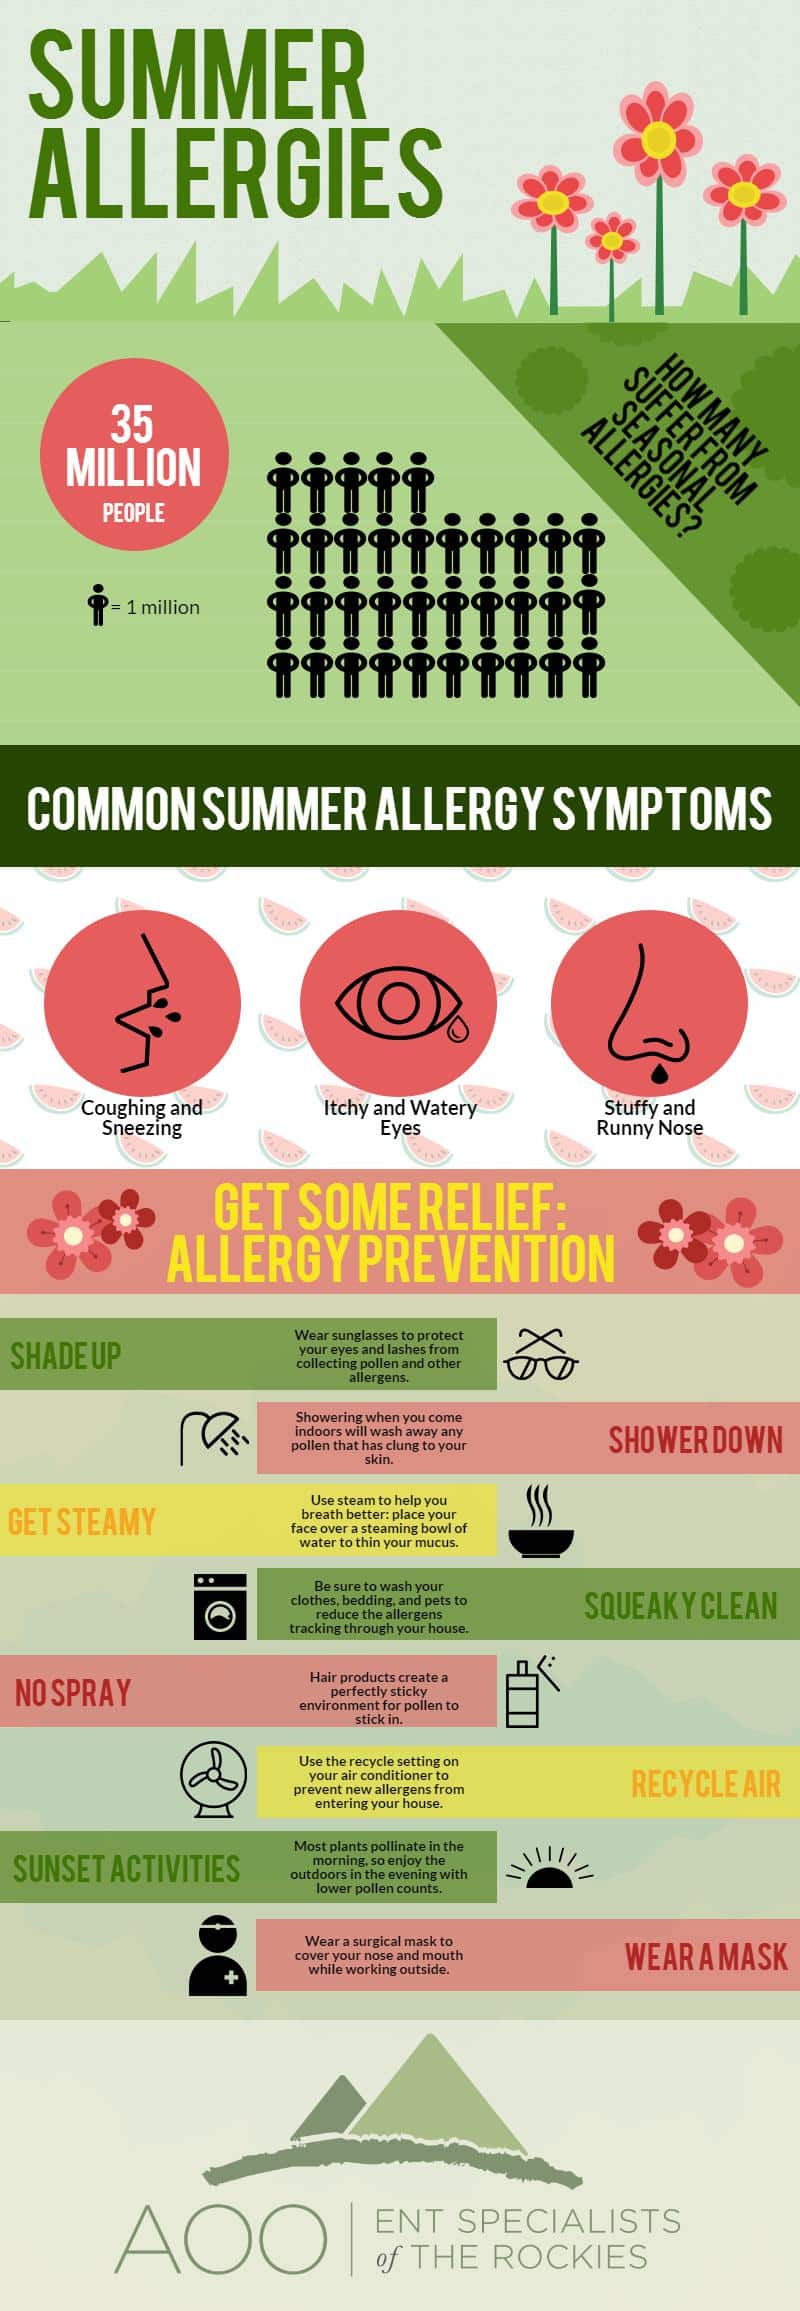 summer allergy relief